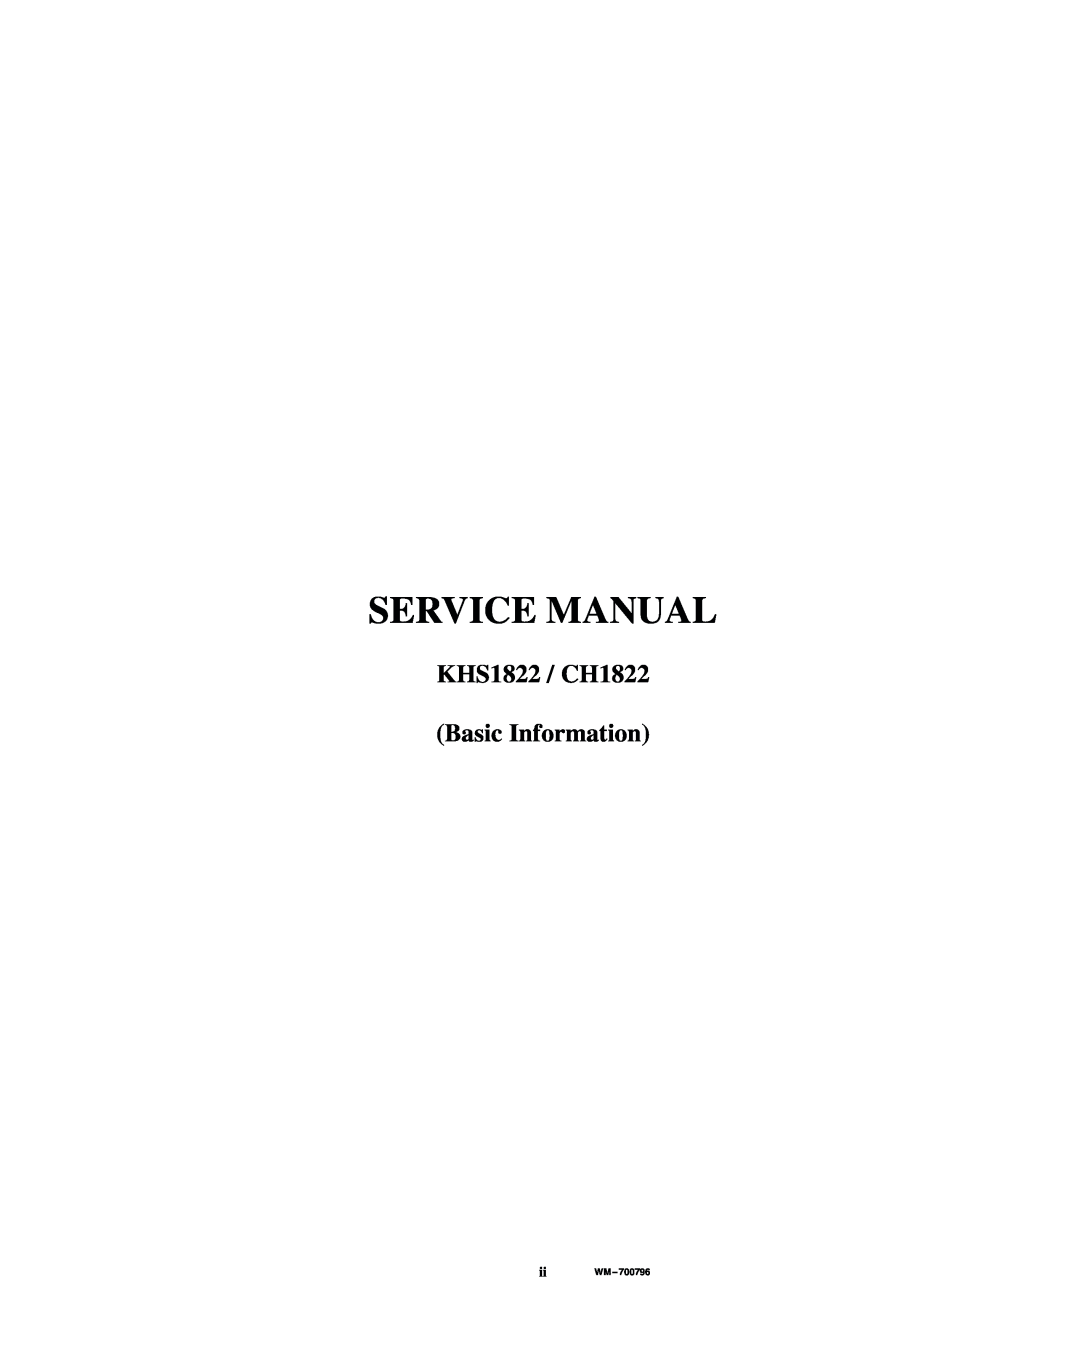 Sanyo service manual KHS1822 / CH1822 Basic Information, iiWM 